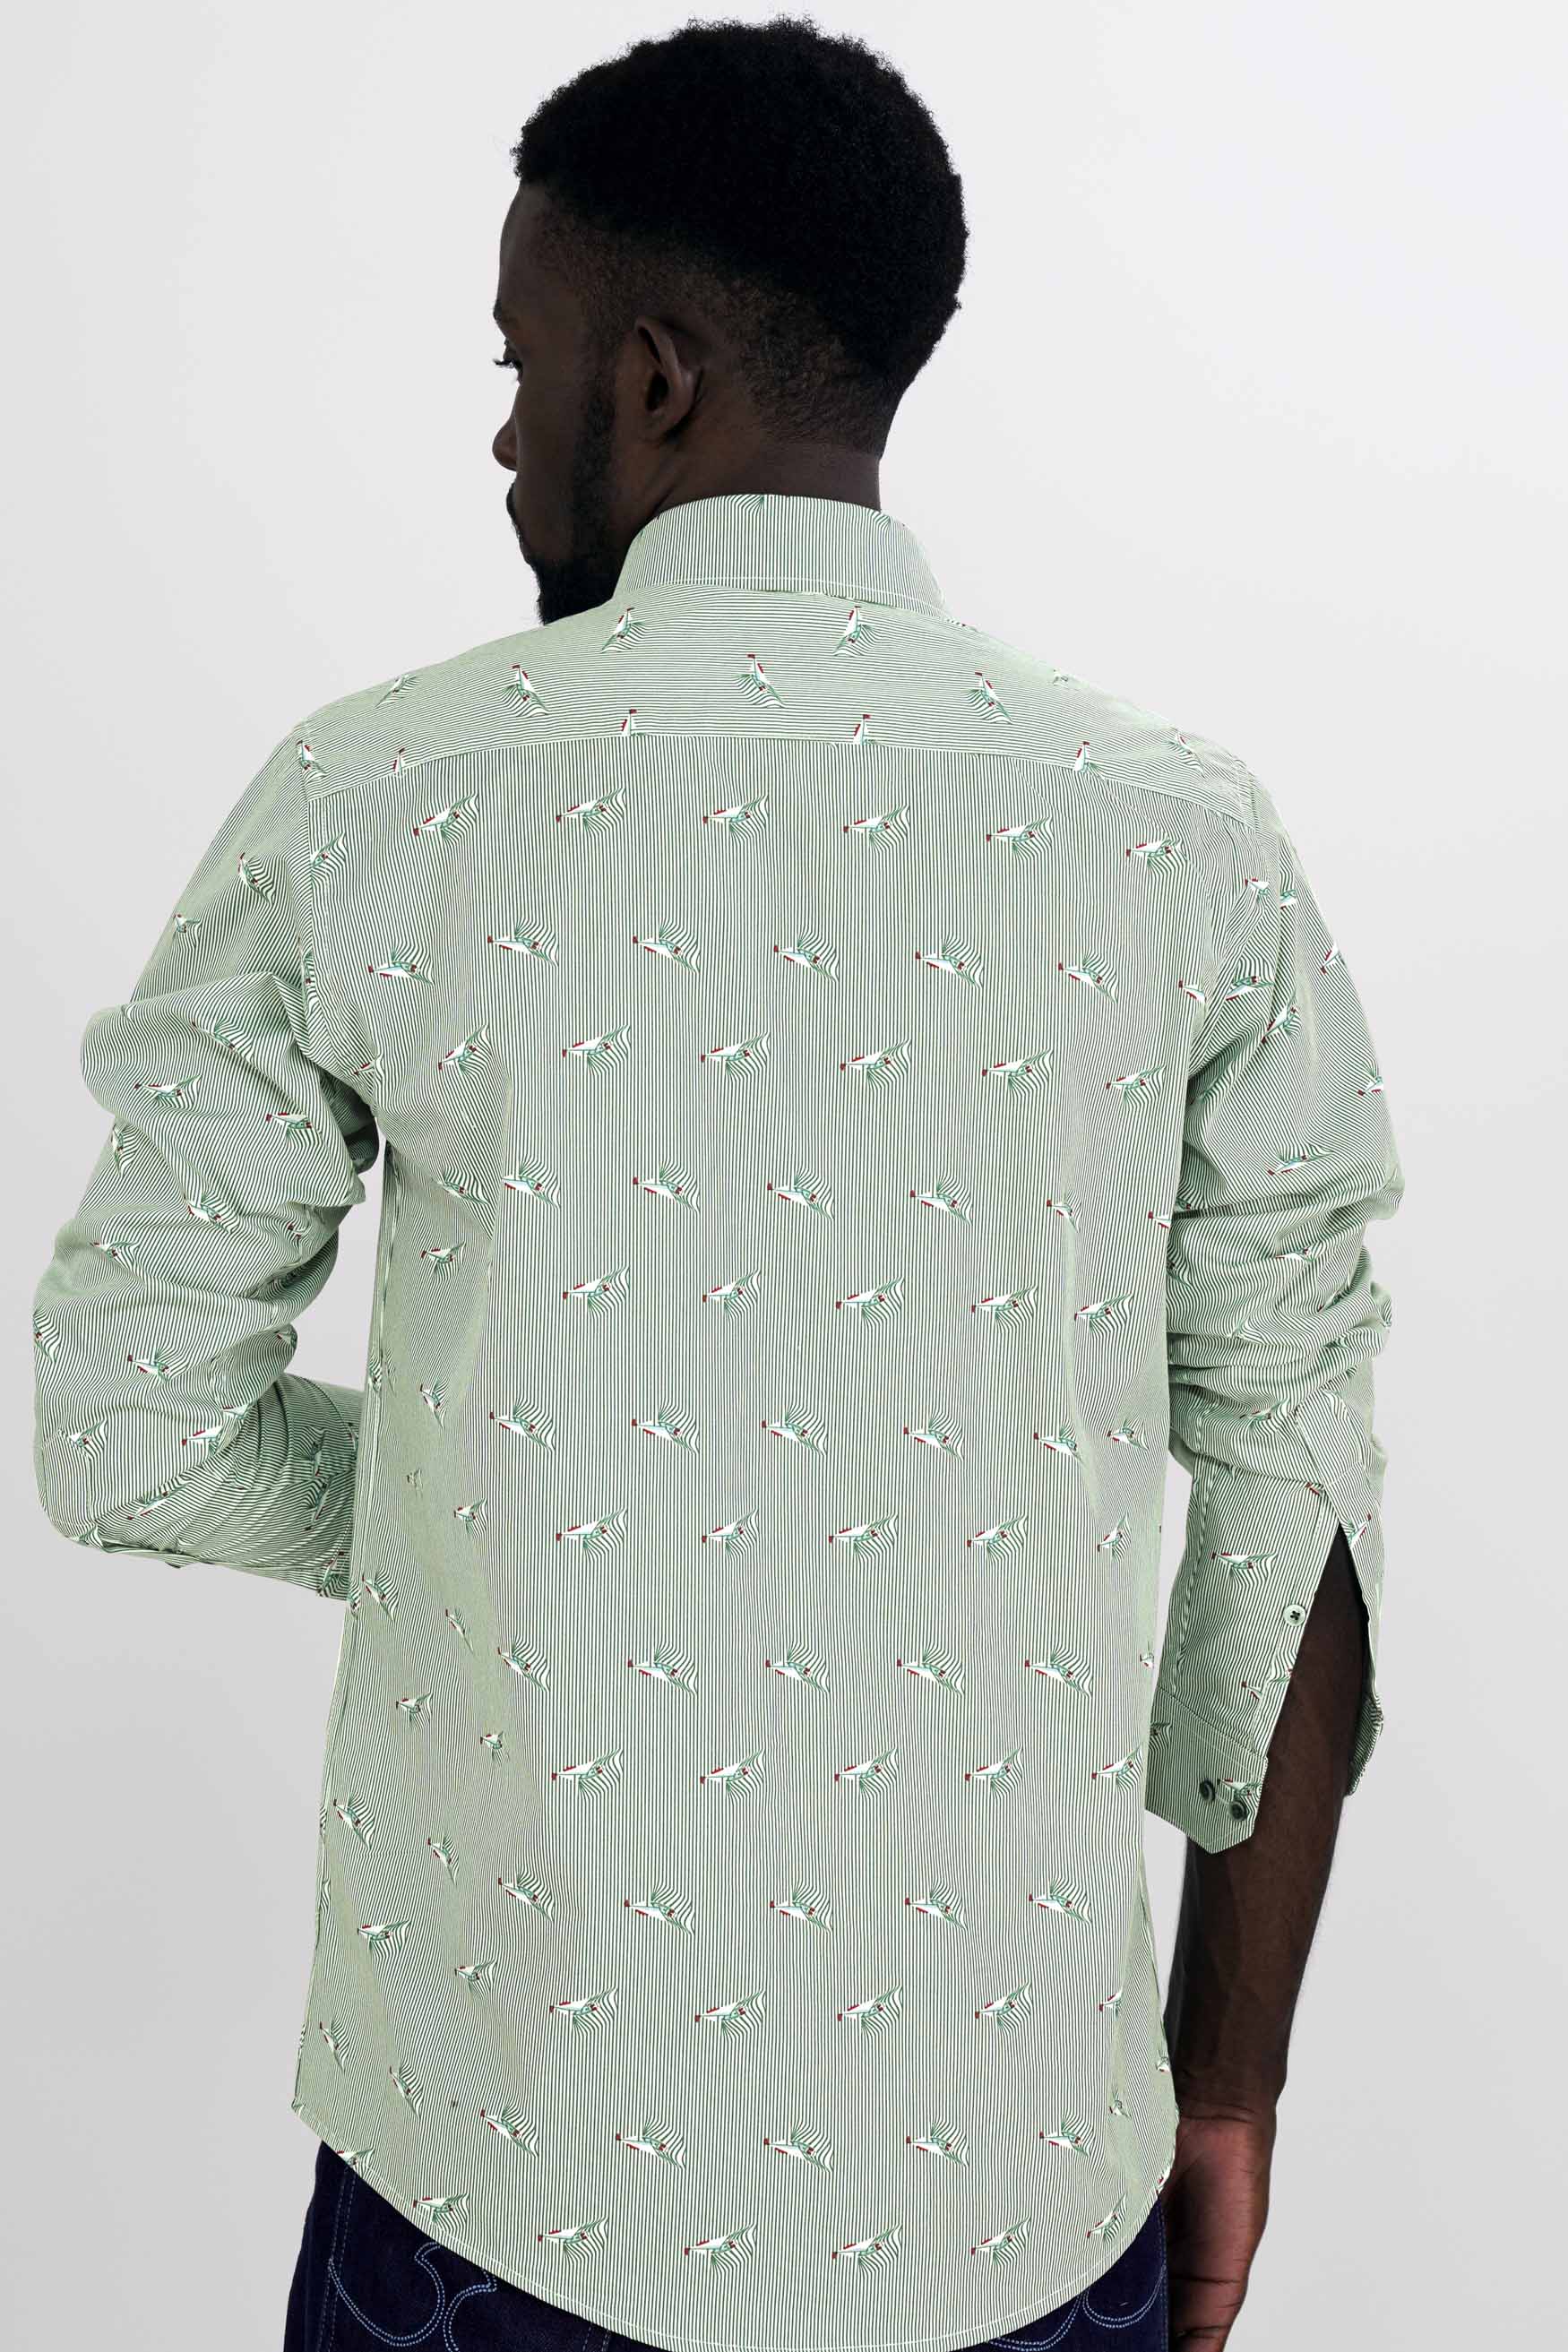 Bright White with Seafoam Green Striped Premium Cotton Shirt